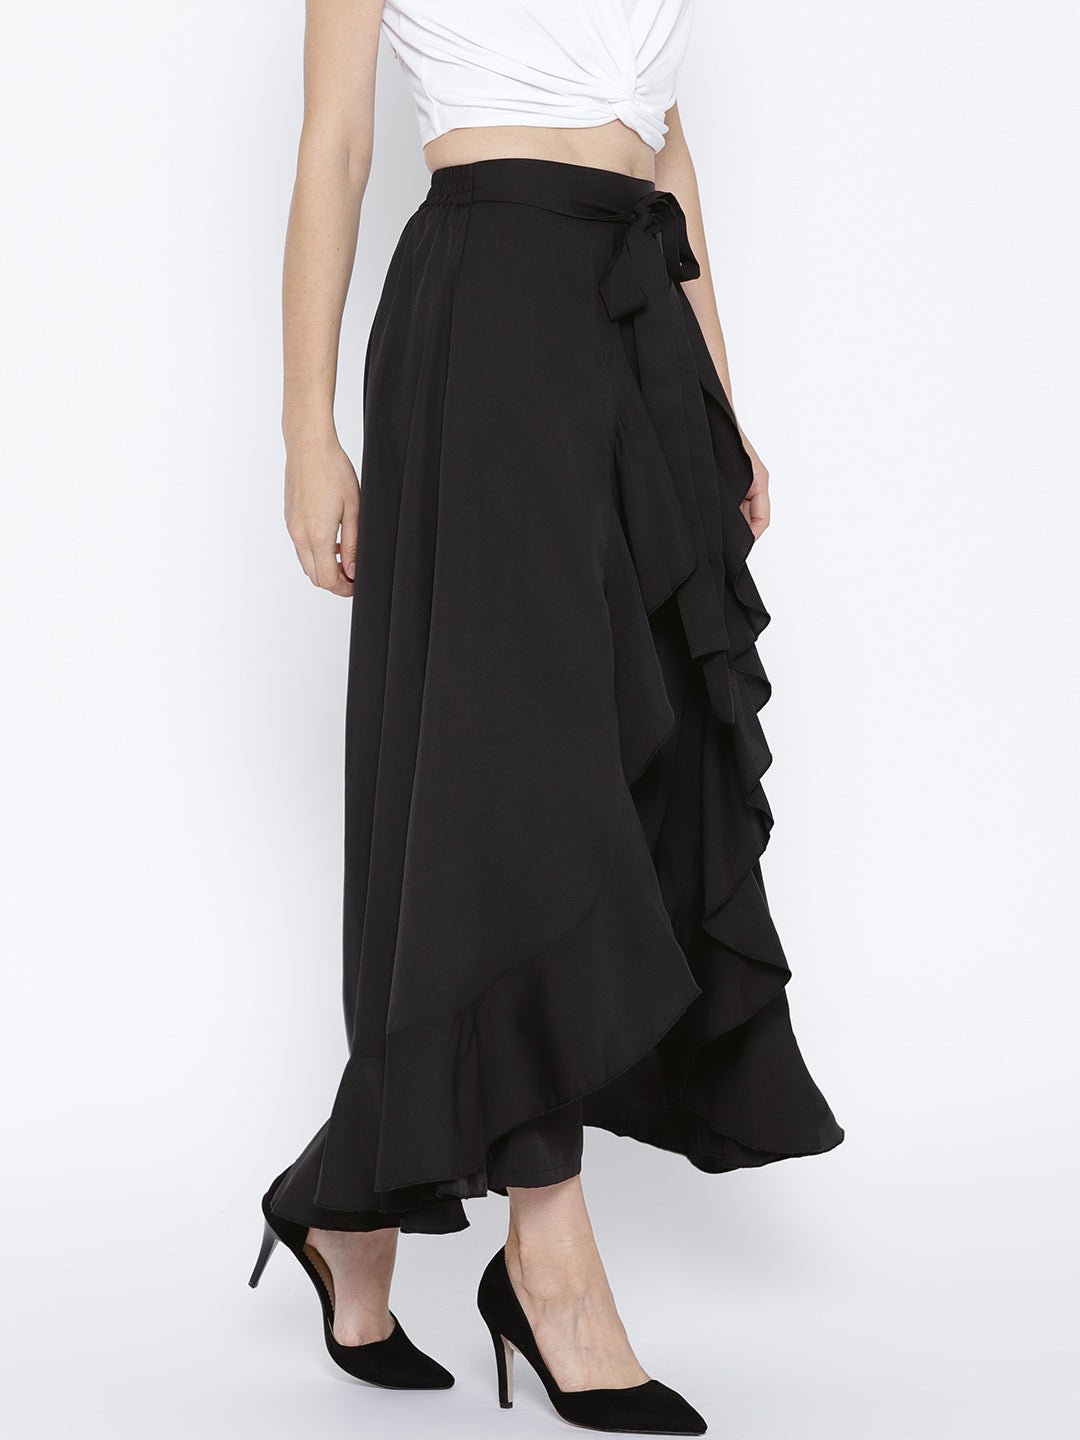 Folk Republic Women Solid Black Waist Tie-Up Ruffled Maxi Skirt with Attached Trousers - #folk republic#